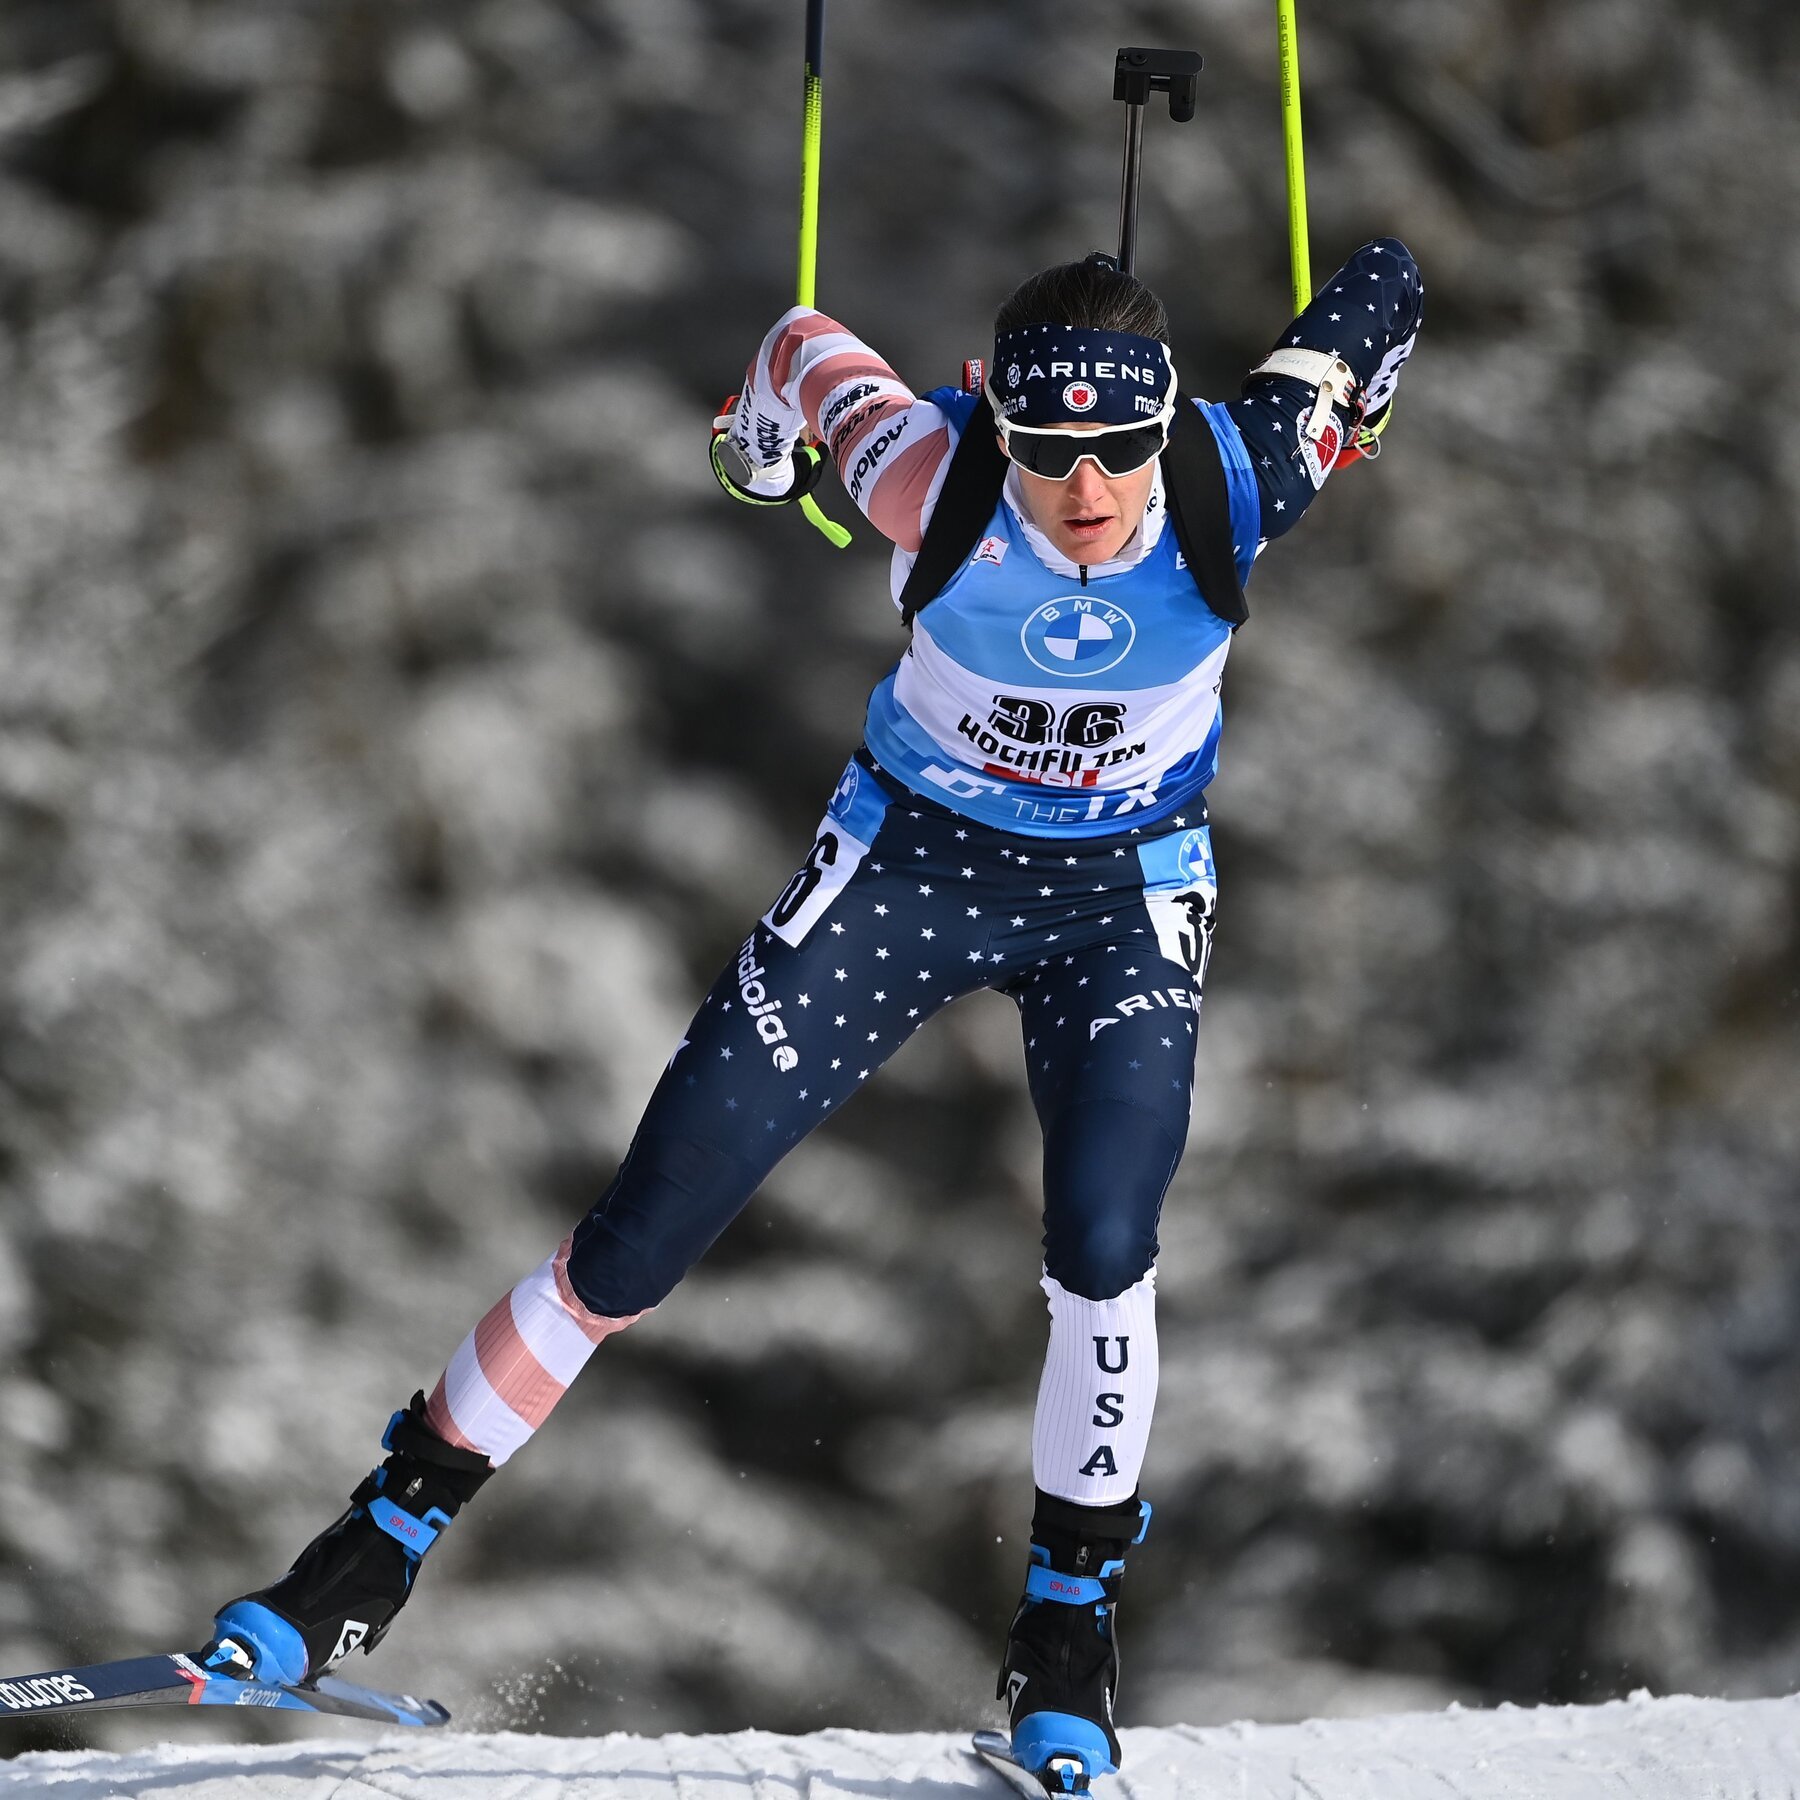 Clare Egan has earned her 2nd Olympic berth in biathlon.